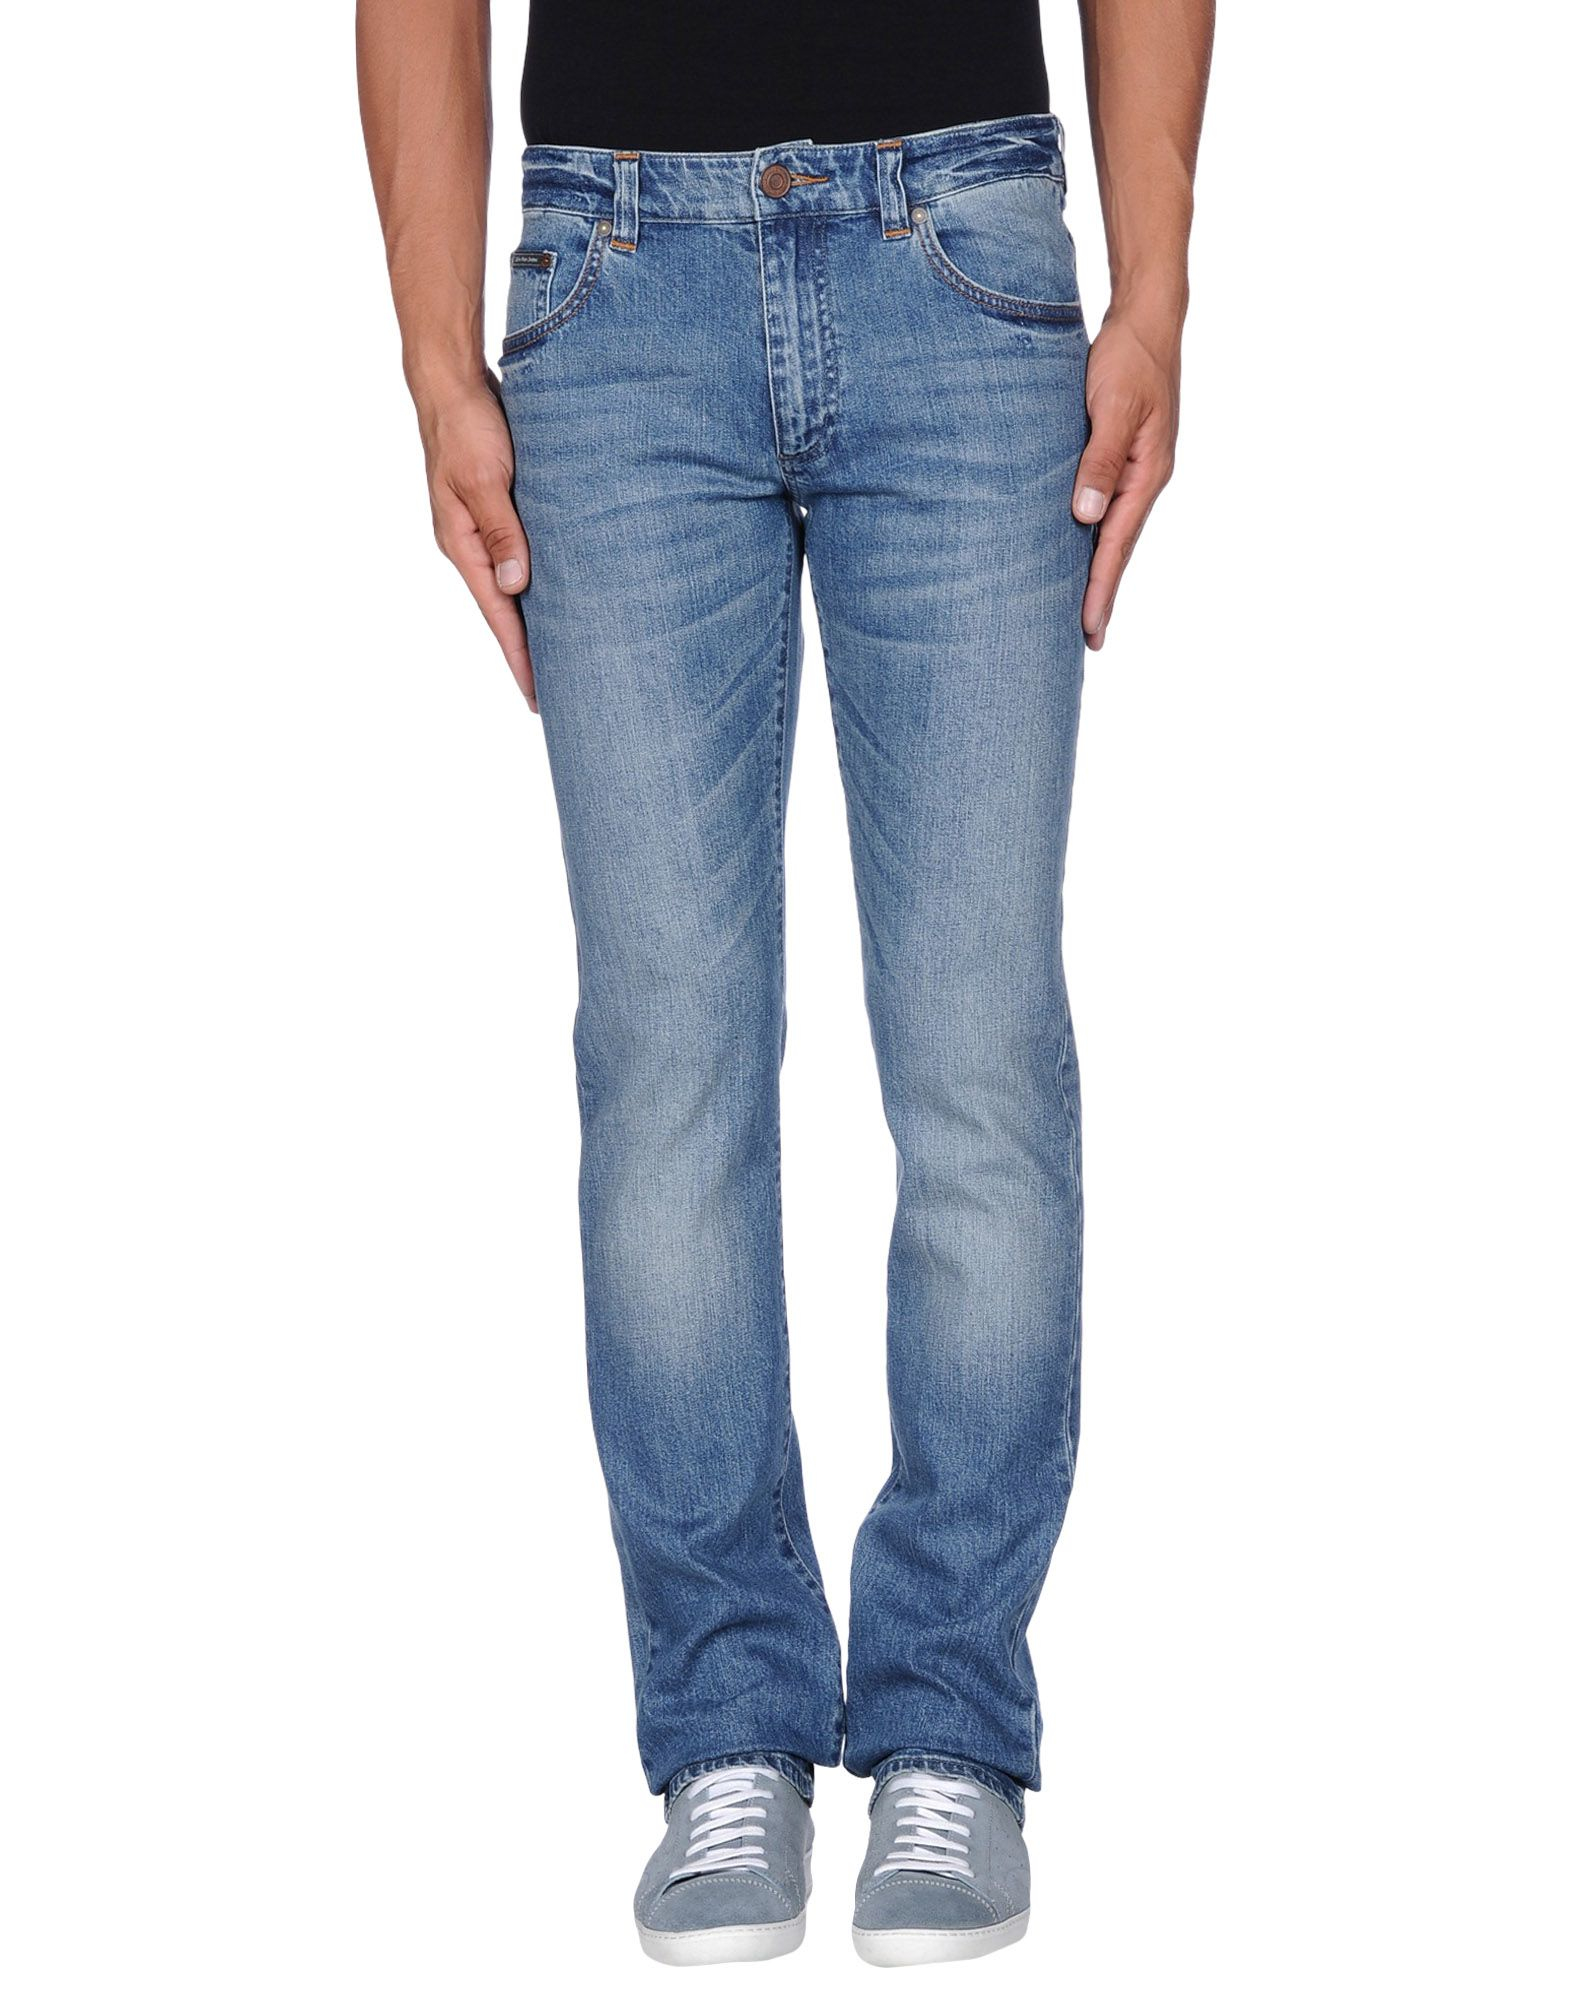 Lyst - Calvin Klein Jeans Denim Trousers in Blue for Men